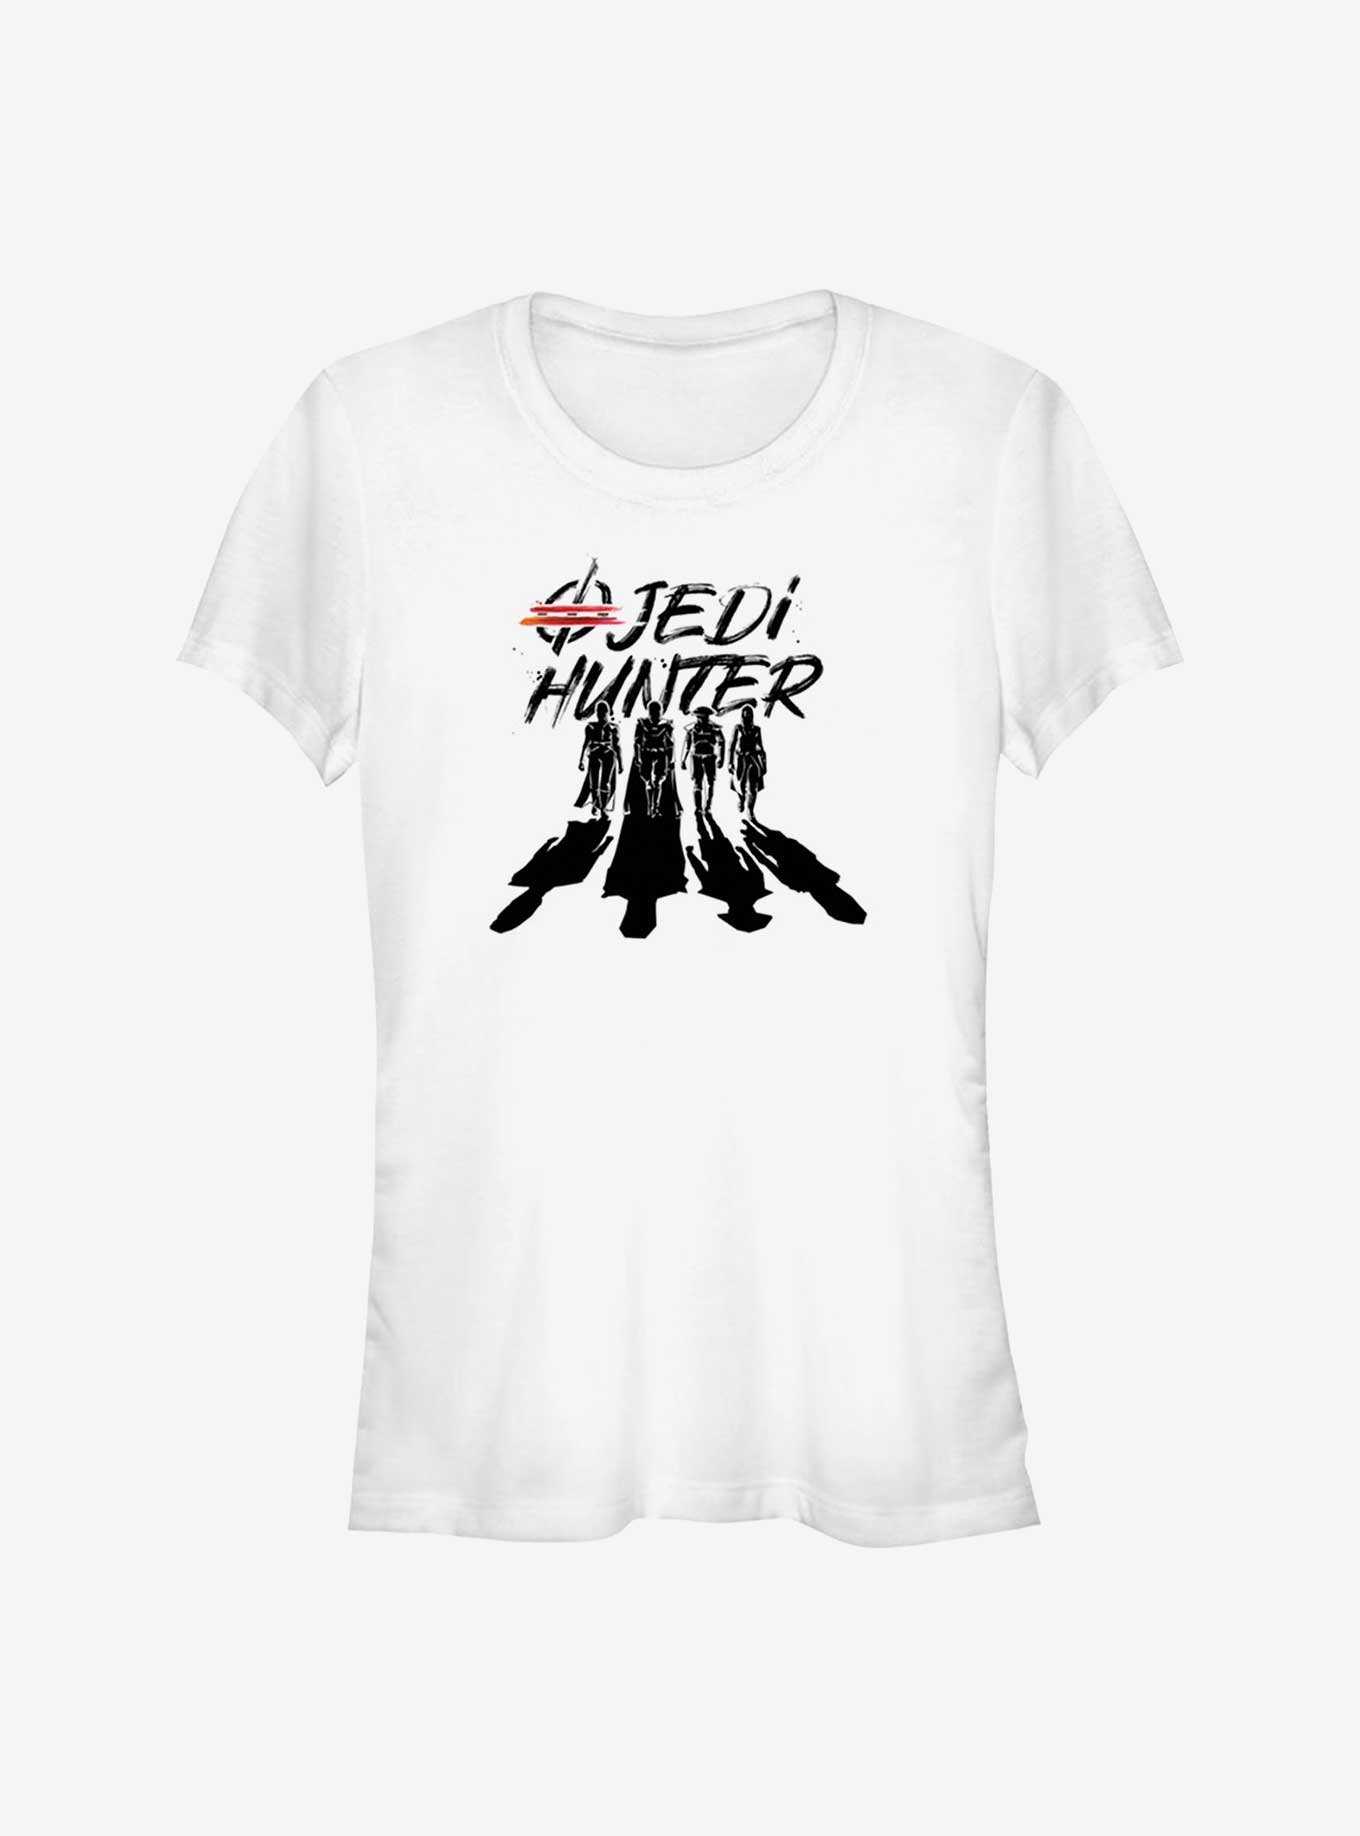 Star Wars Obi-Wan Kenobi Jedi Hunter Silhouettes Girls T-Shirt, , hi-res